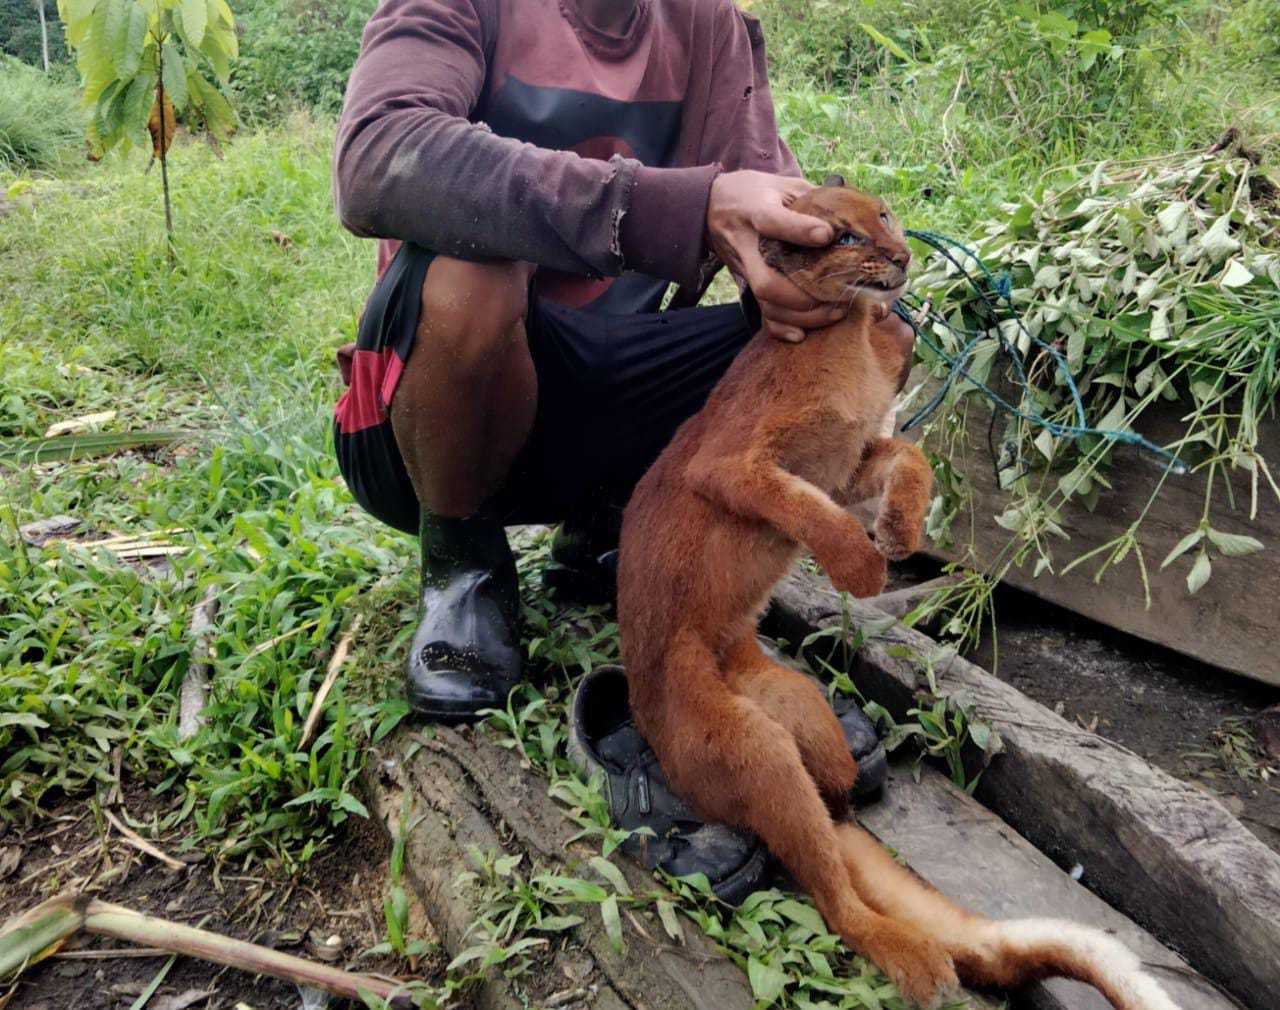 Seekor kucing merah ditemukan mati terkena jerat di kawasan hutan sekitar Desa Joloi, Kecamatan Seribu Riam, Kabupaten Murung Raya, Kalimantan Tengah. | Foto: Melky